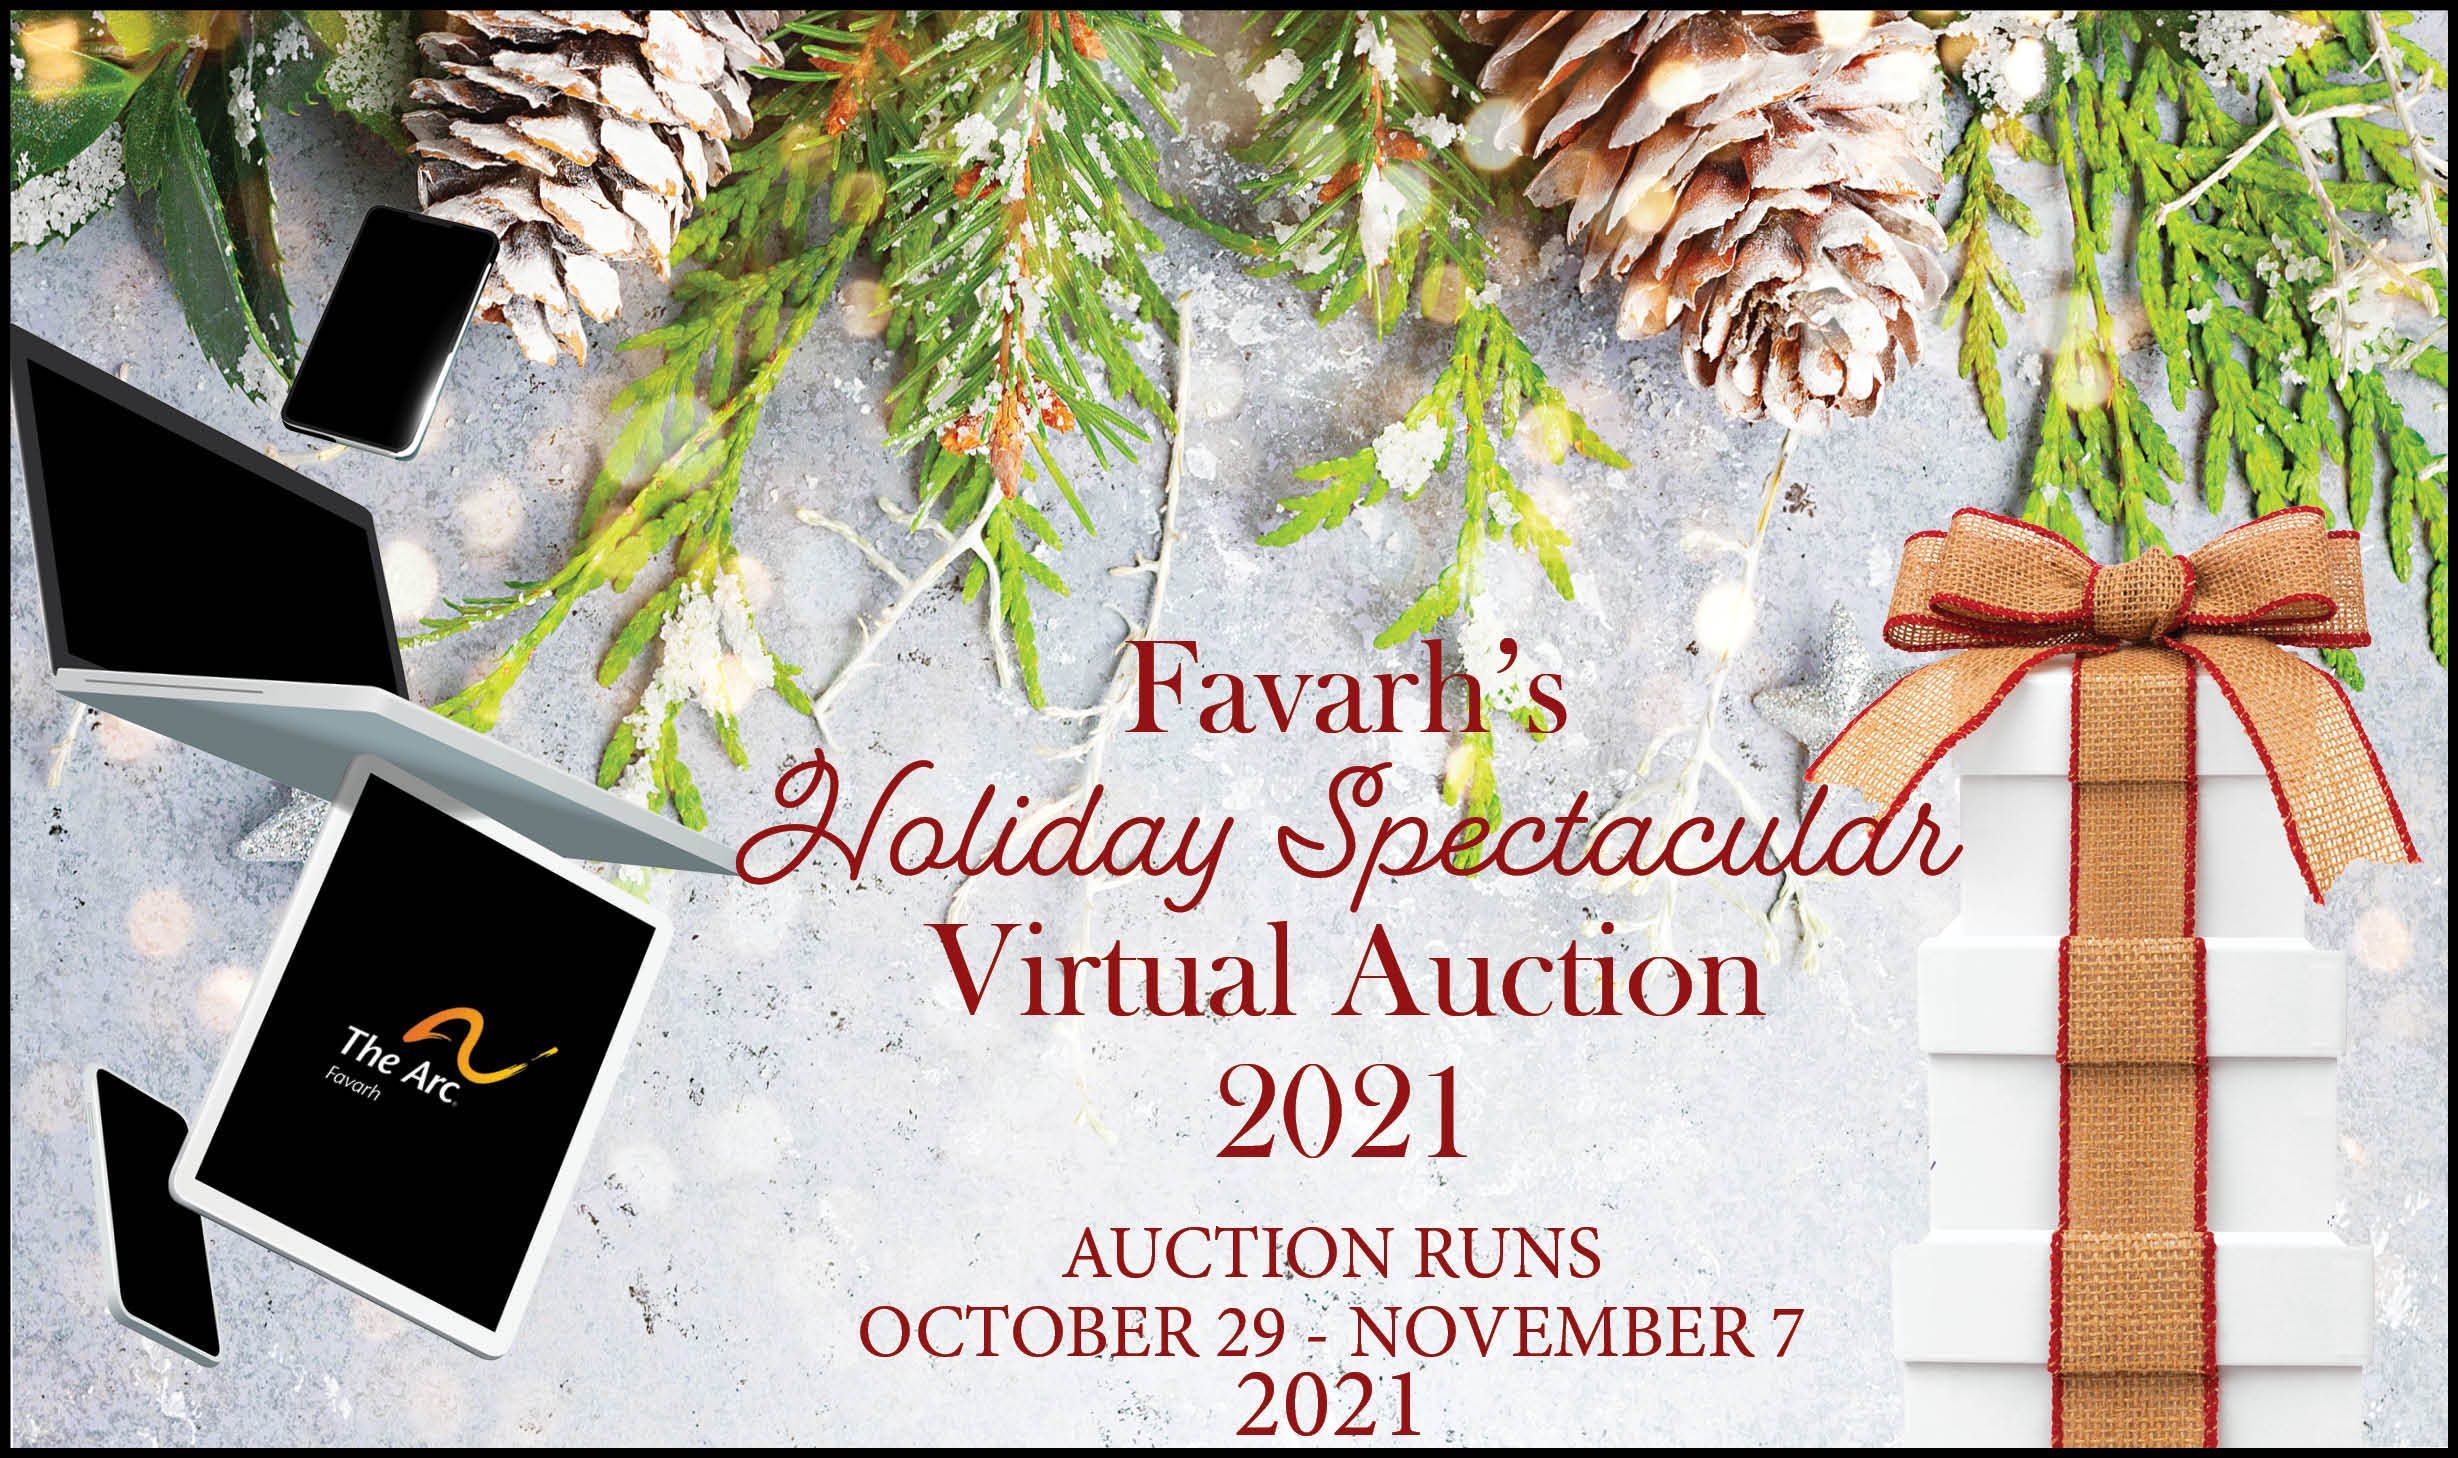 Favarh's Virtual Auction